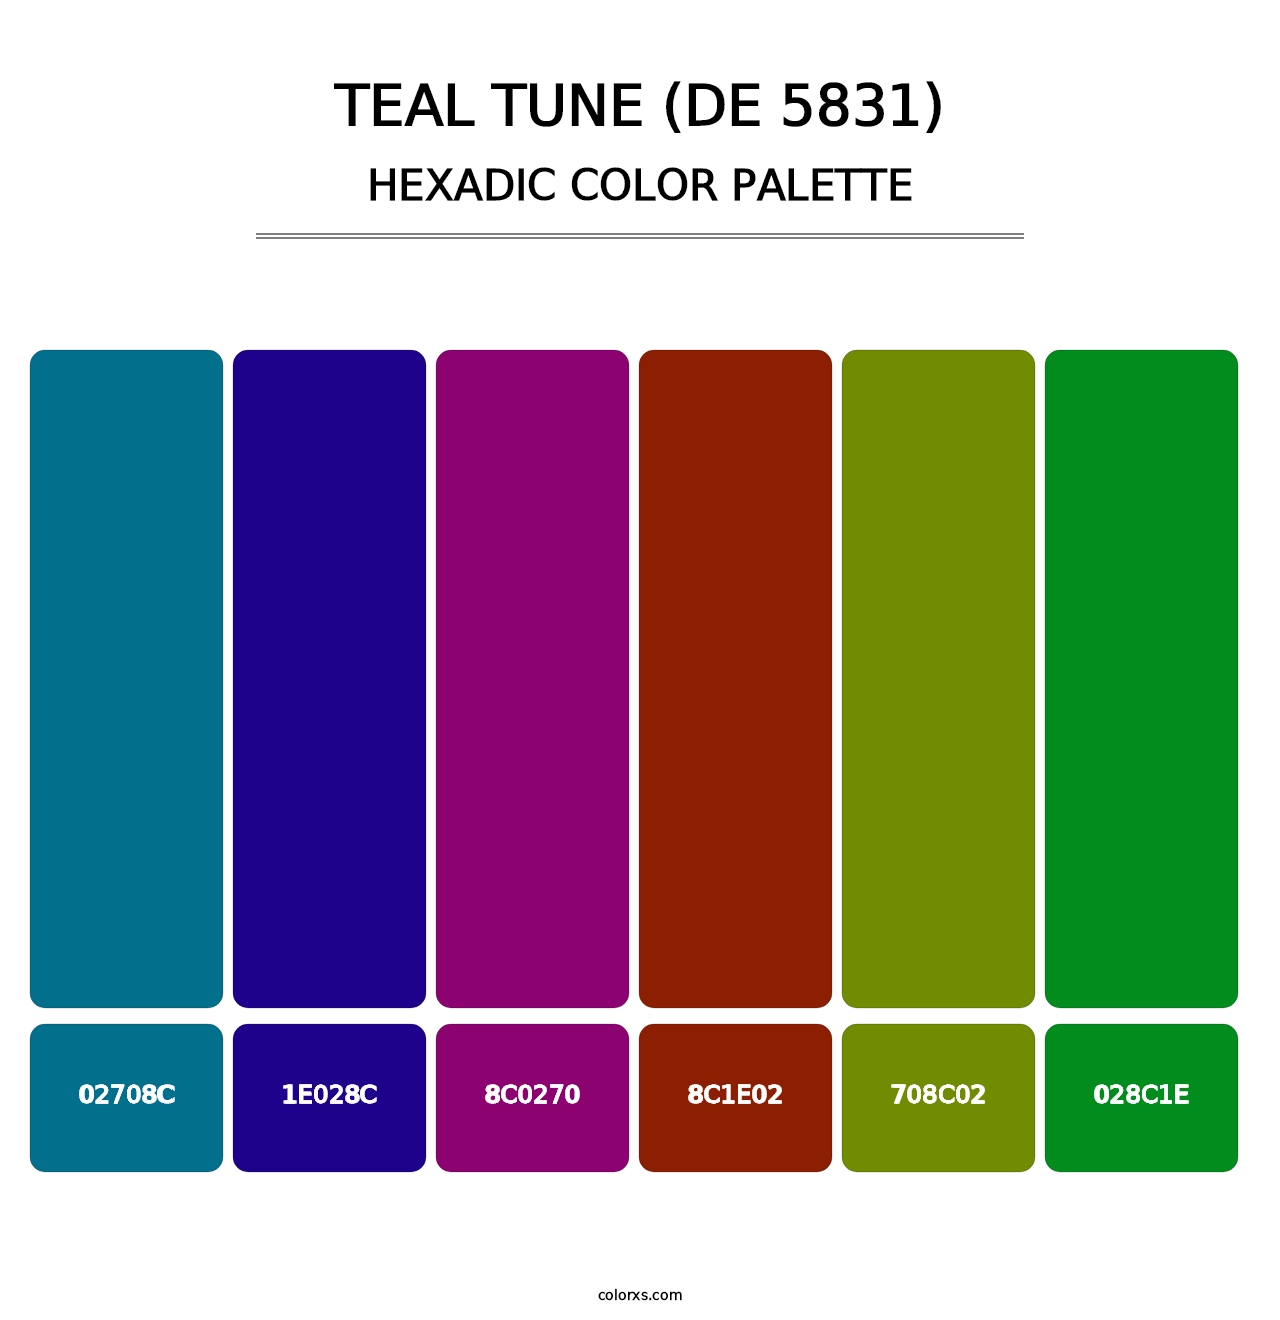 Teal Tune (DE 5831) - Hexadic Color Palette